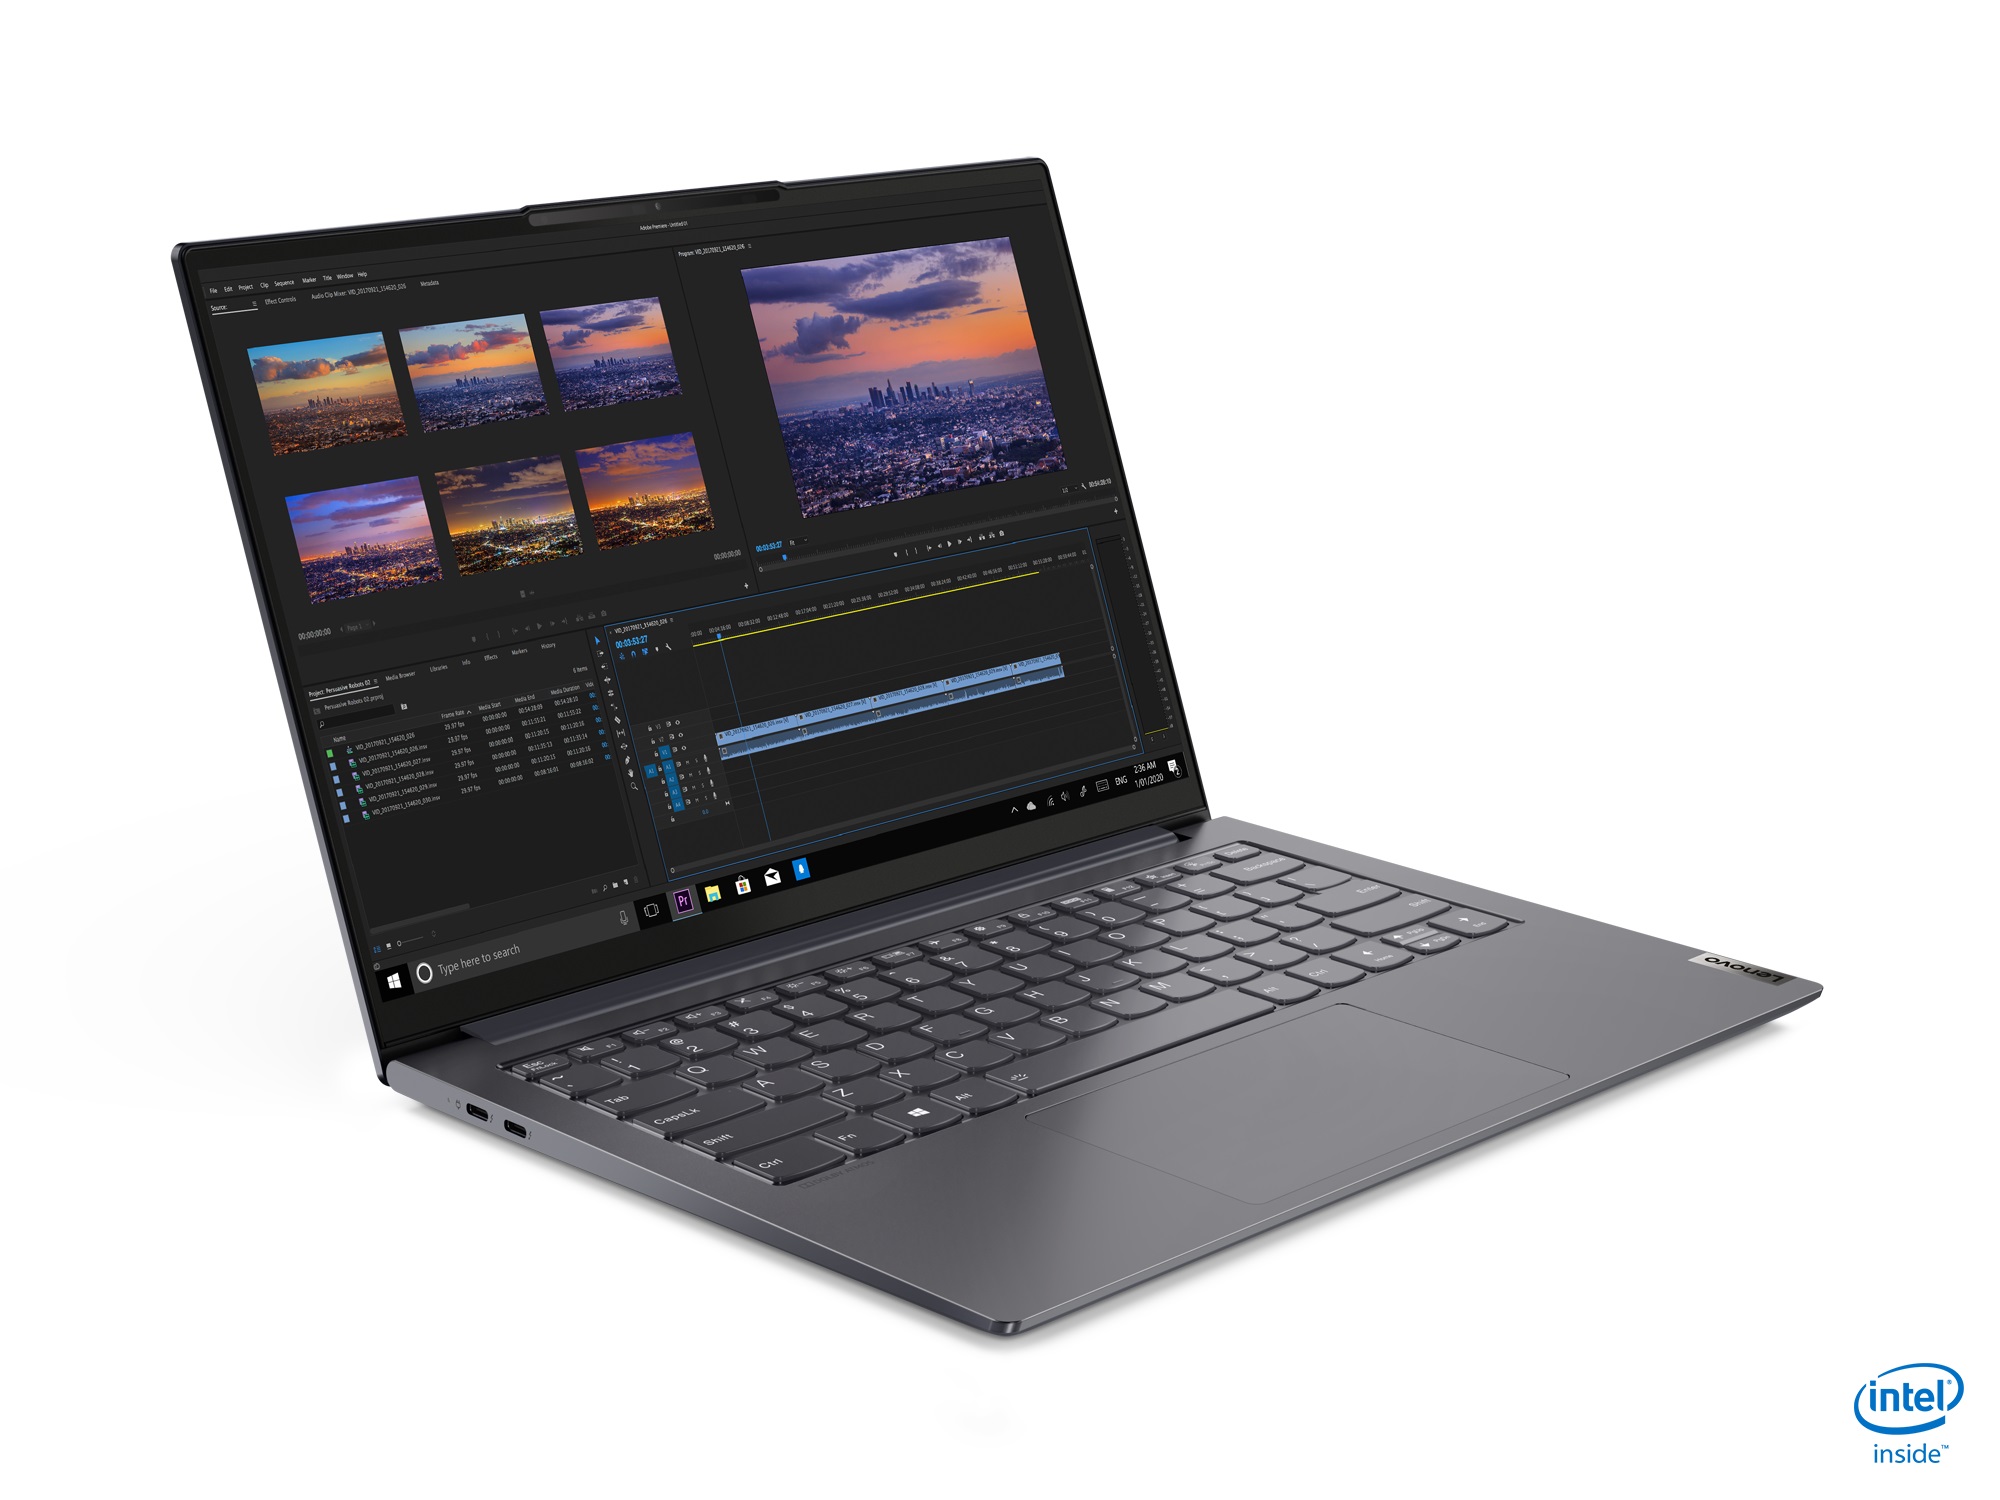 Lenovo introduces new Yoga consumer laptops running Windows 10 7786f225d604d143fa74ae793aa093c9.jpg